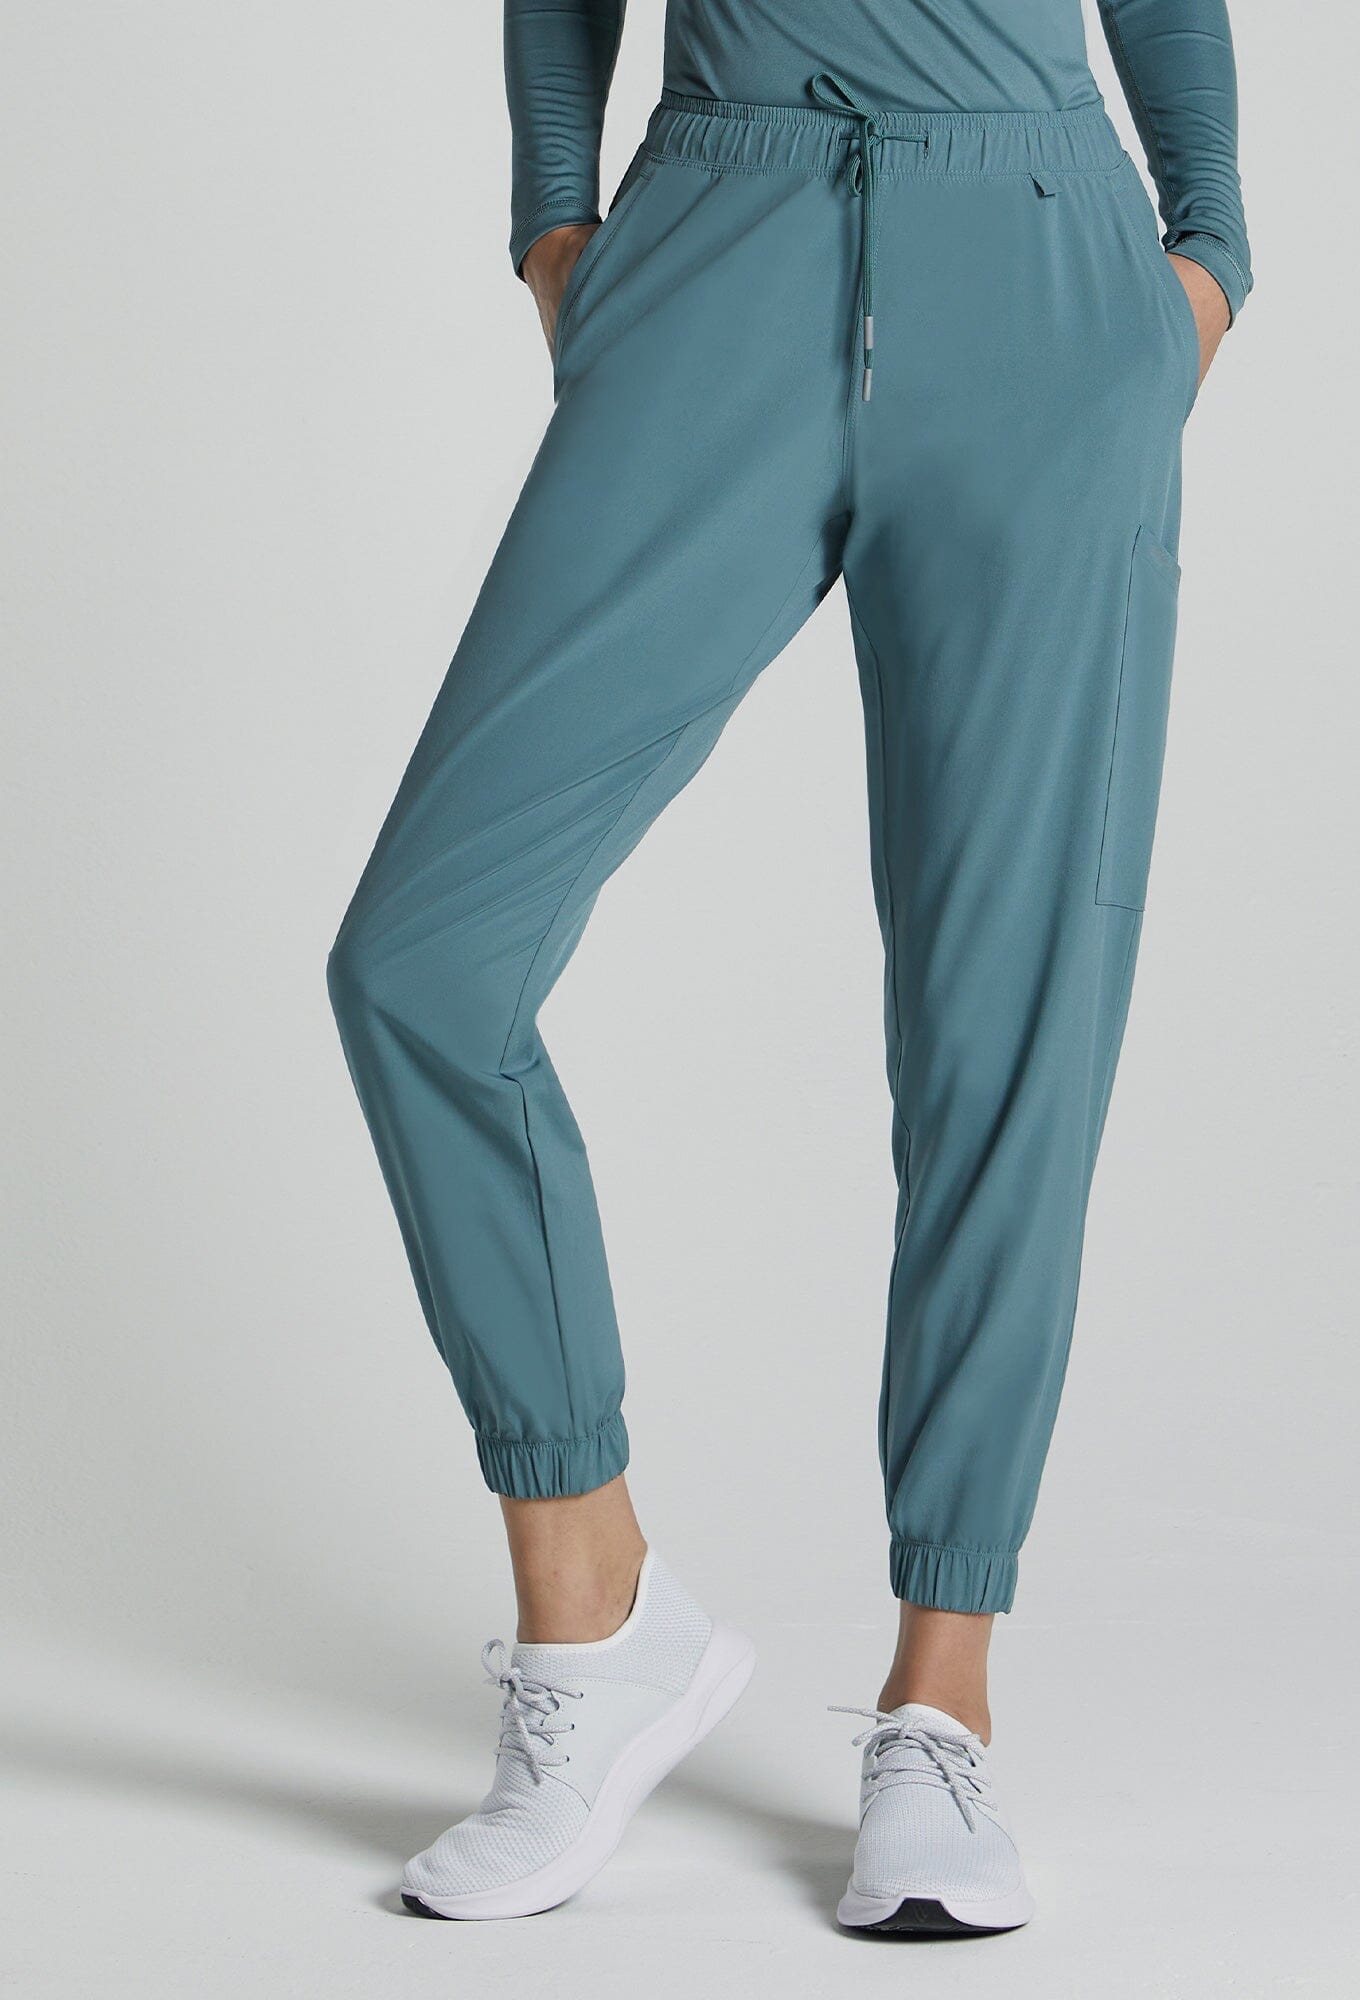 Jade Green Susan Petite Multi-Pocket Scrub Joggers – Noel Asmar Uniforms